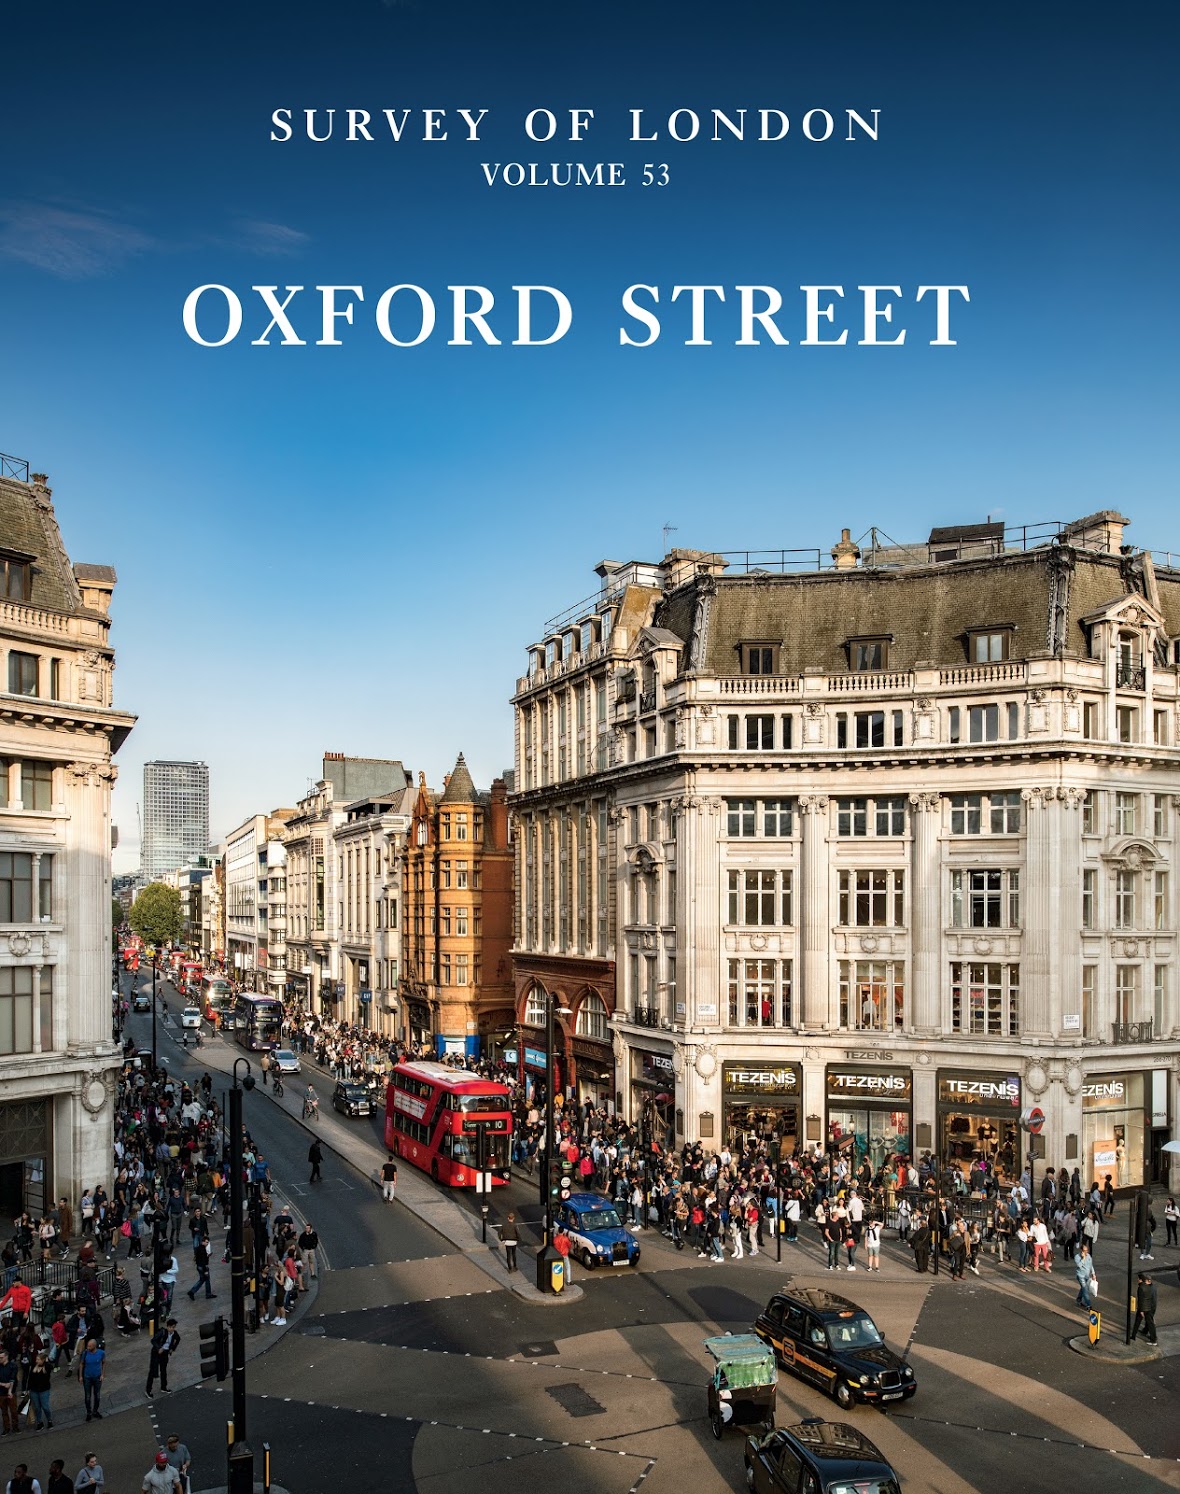 Oxford street shops